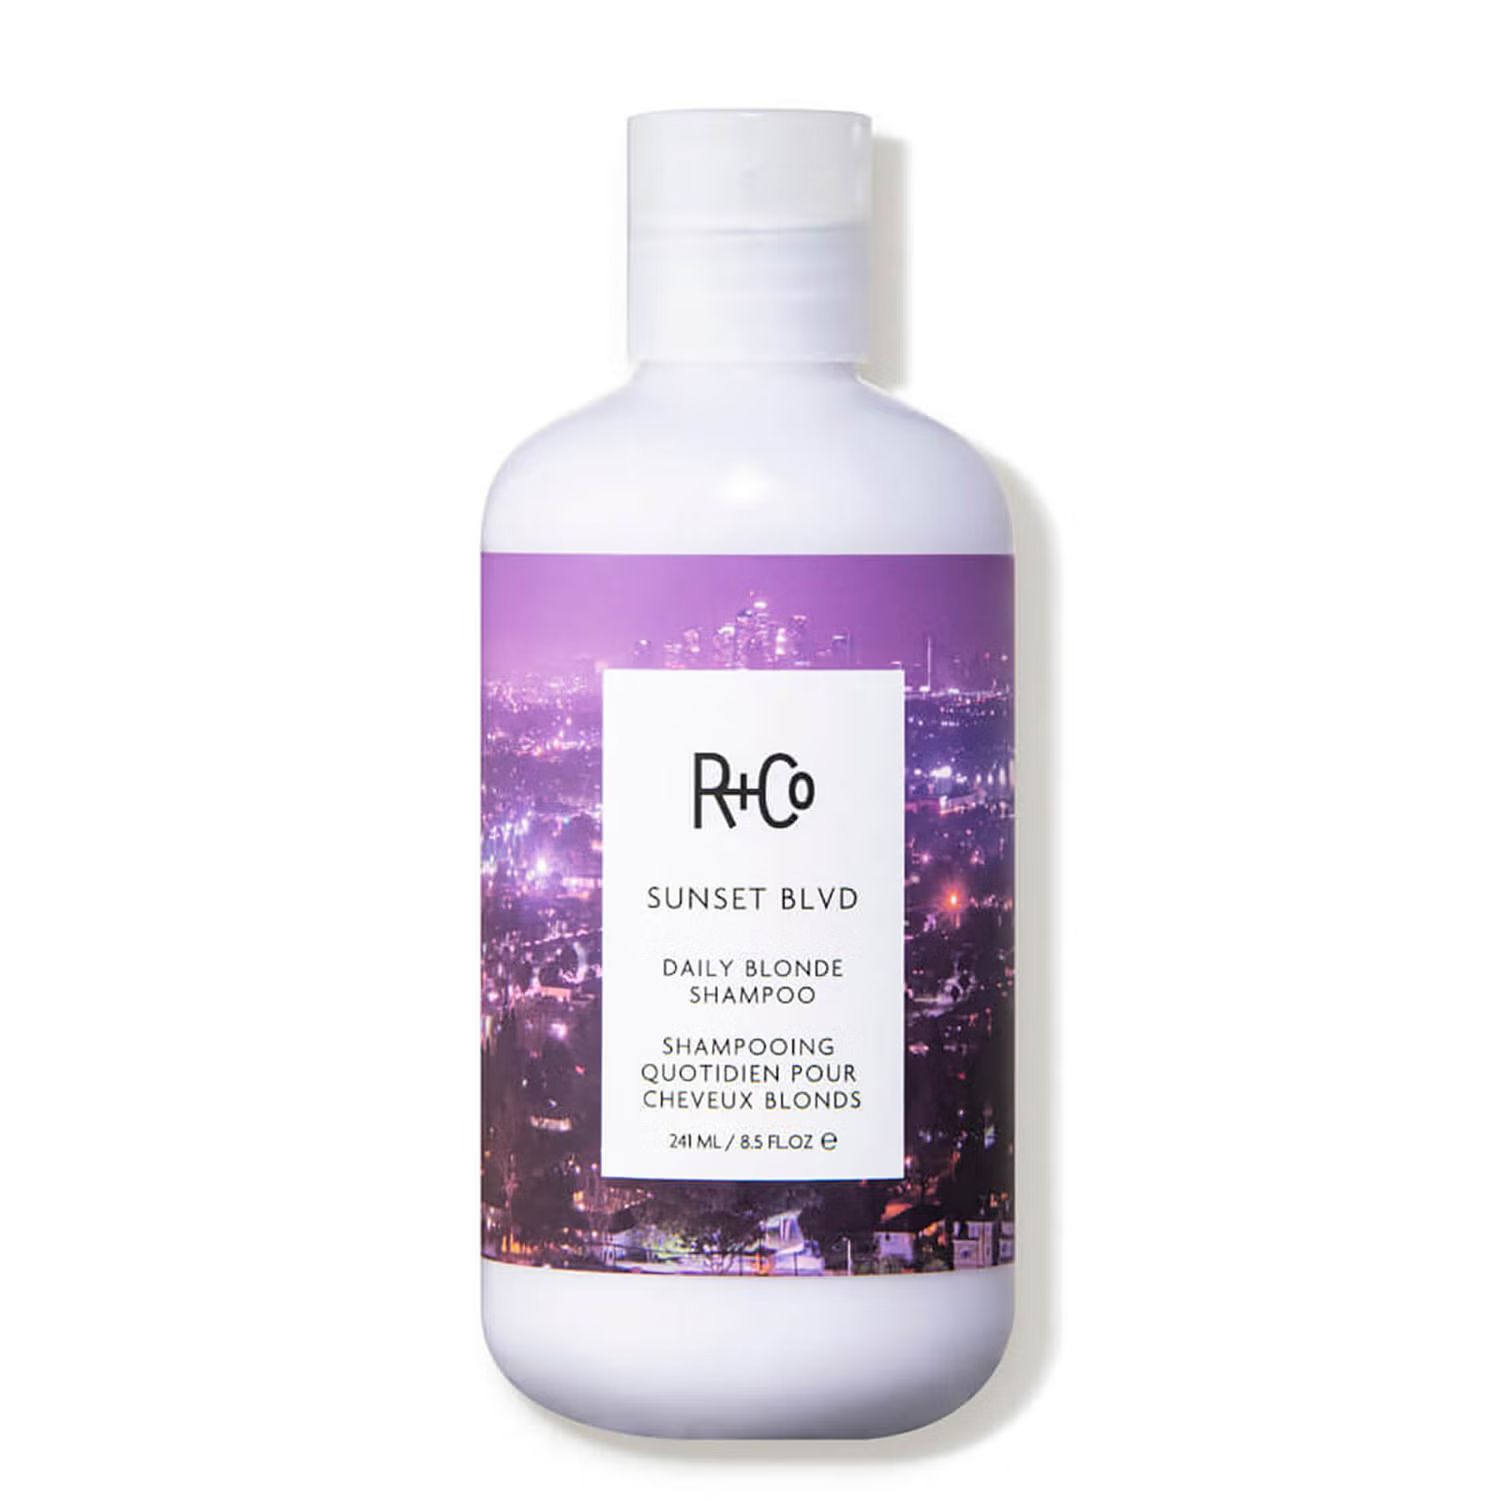 R+Co SUNSET BLVD Daily Blonde Shampoo (8.5 fl. oz.) | Dermstore (US)